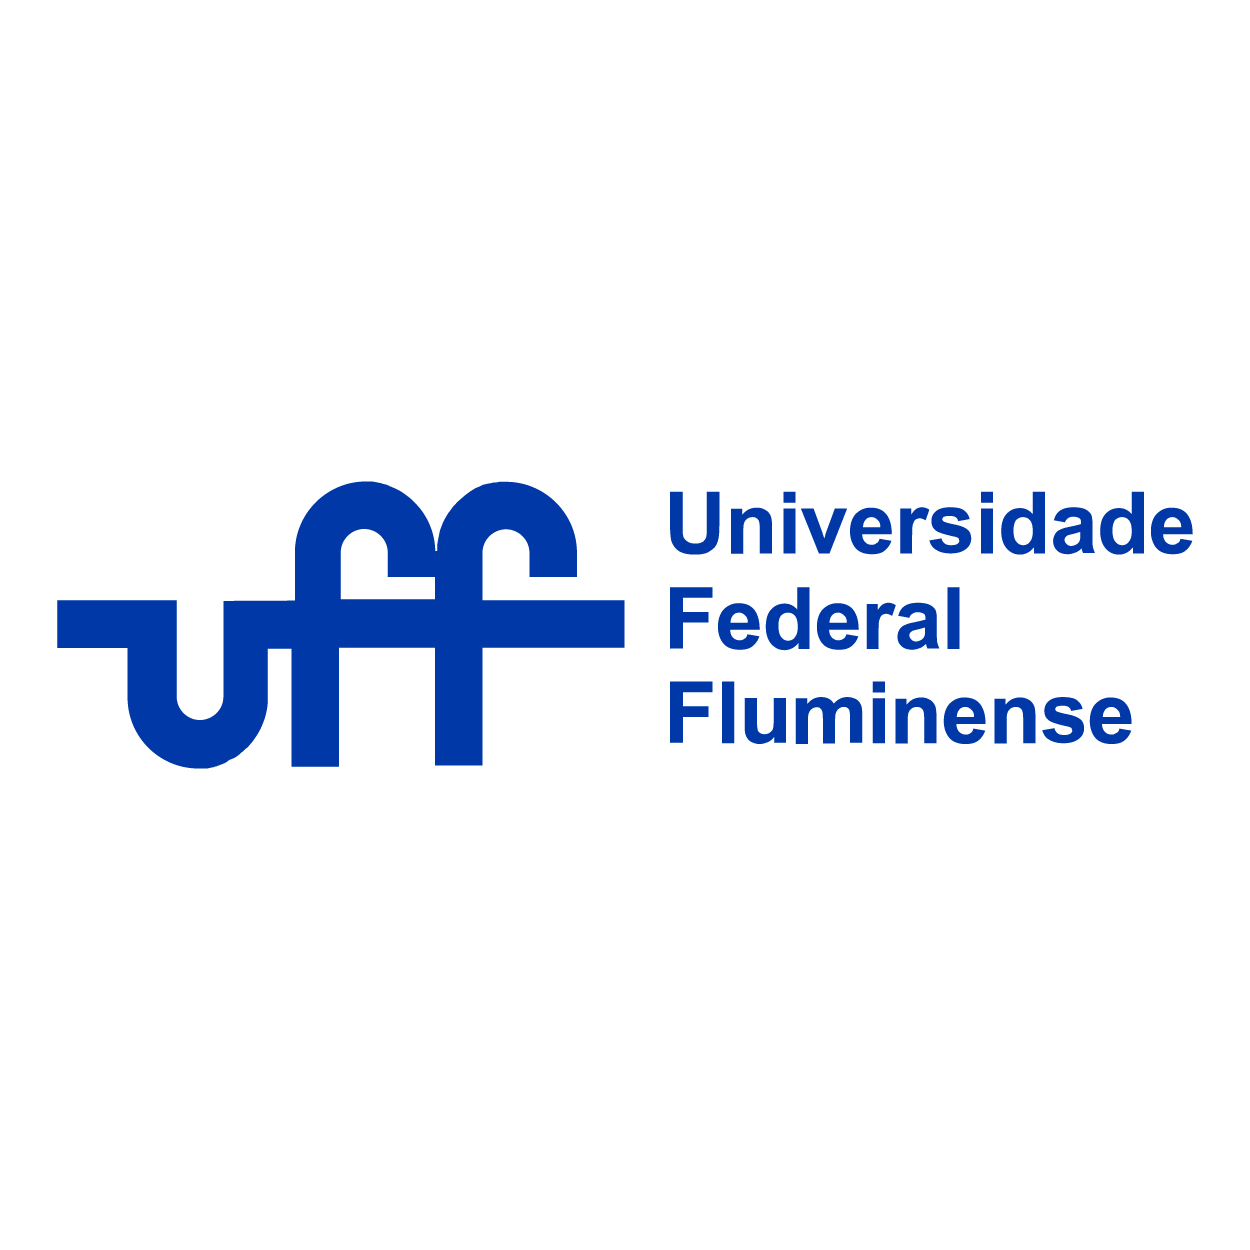 UFF Logo - Universidade Federal Fluminense